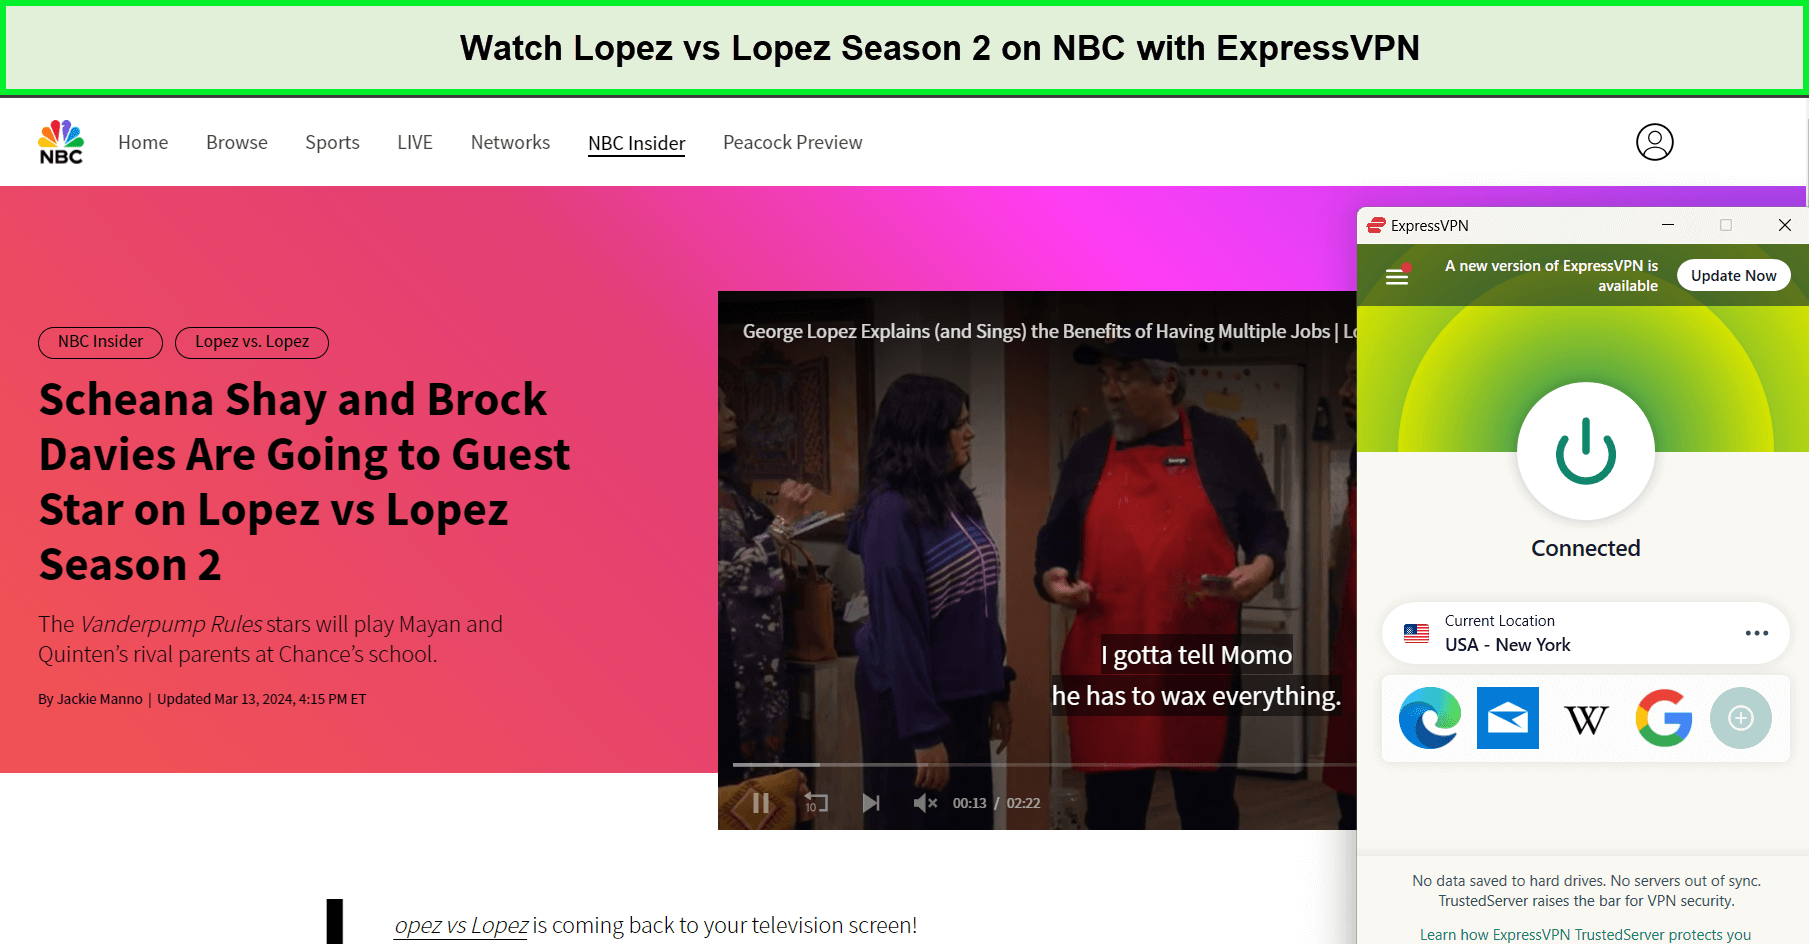 Watch-Lopez-vs-Lopez-Season-2-in-Singapore-on-NBC